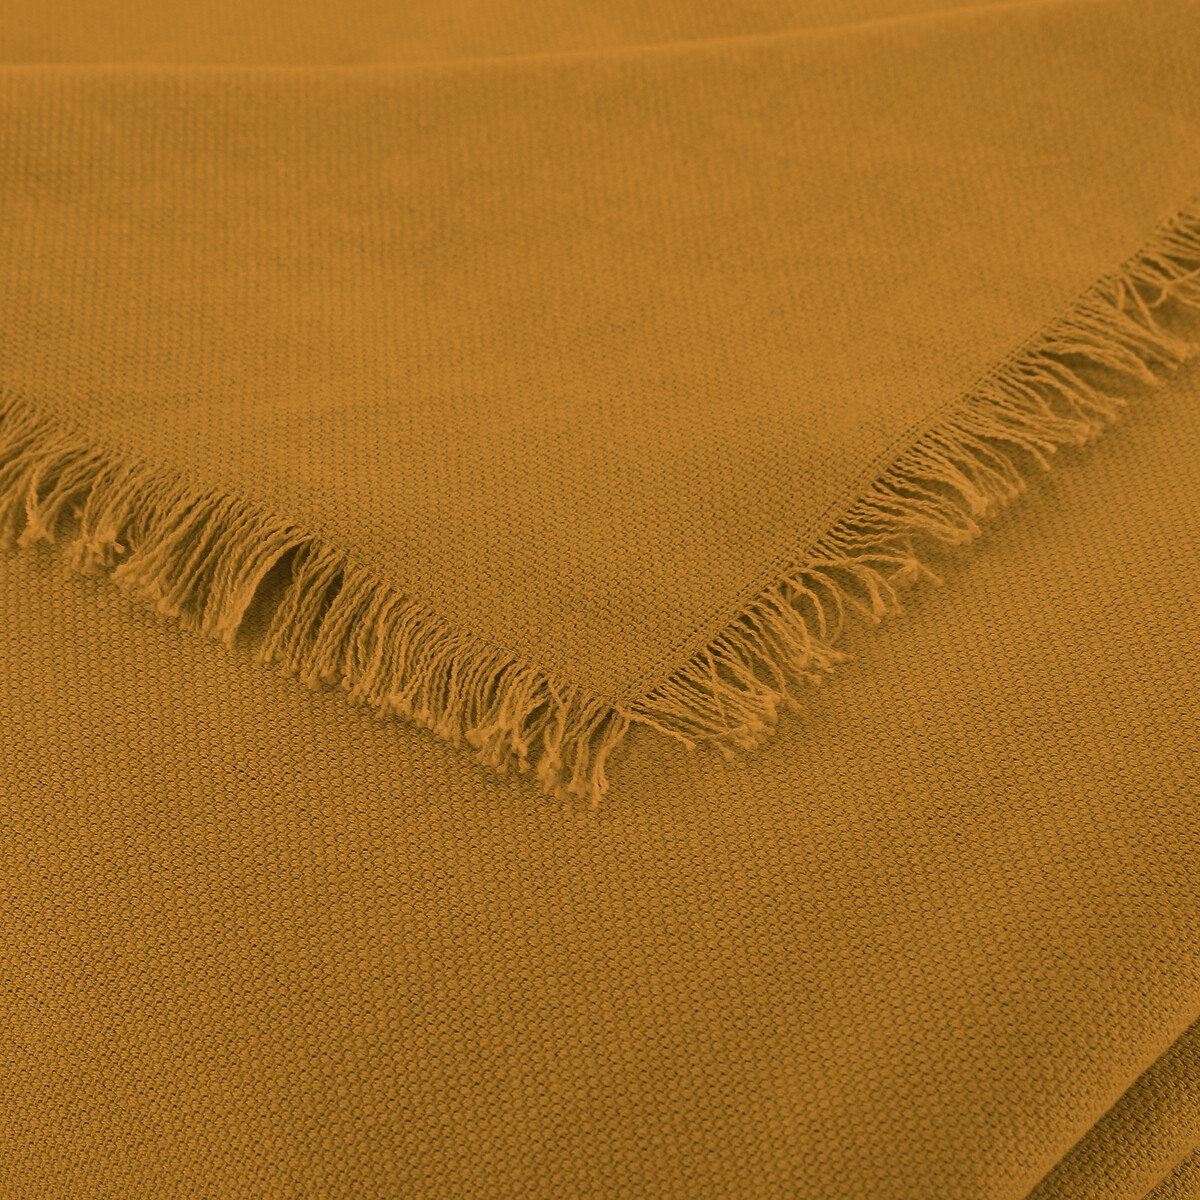 Покрывало La Redoute Из плетеного хлопка Panama 180 x 230 см каштановый, размер 180 x 230 см - фото 3